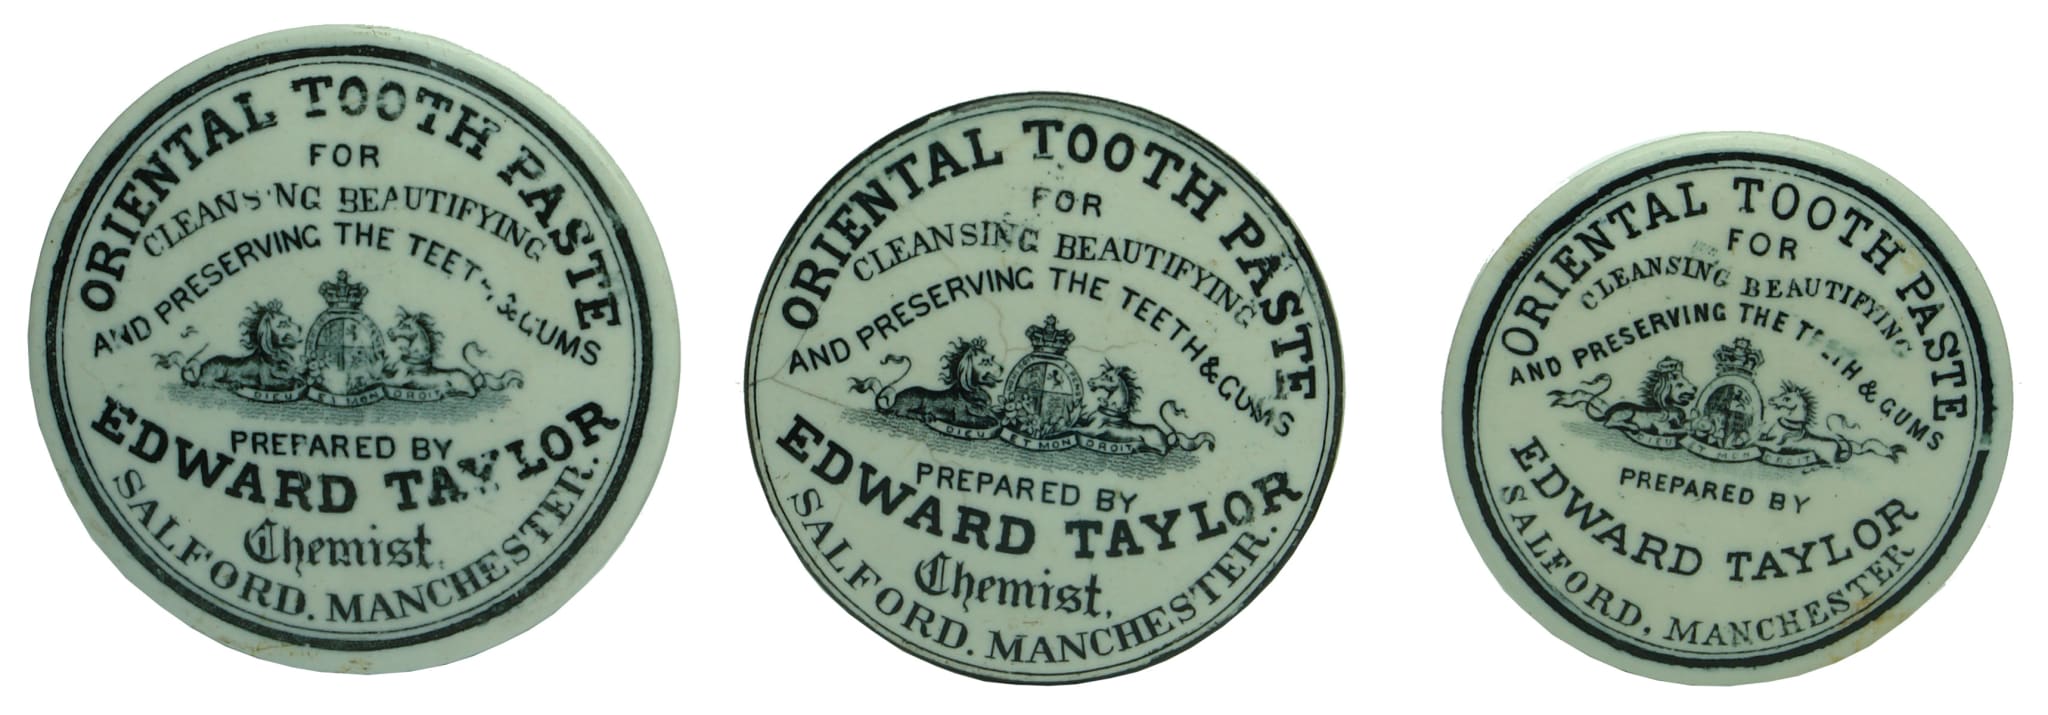 Edward Taylor Manchester Pot Lids